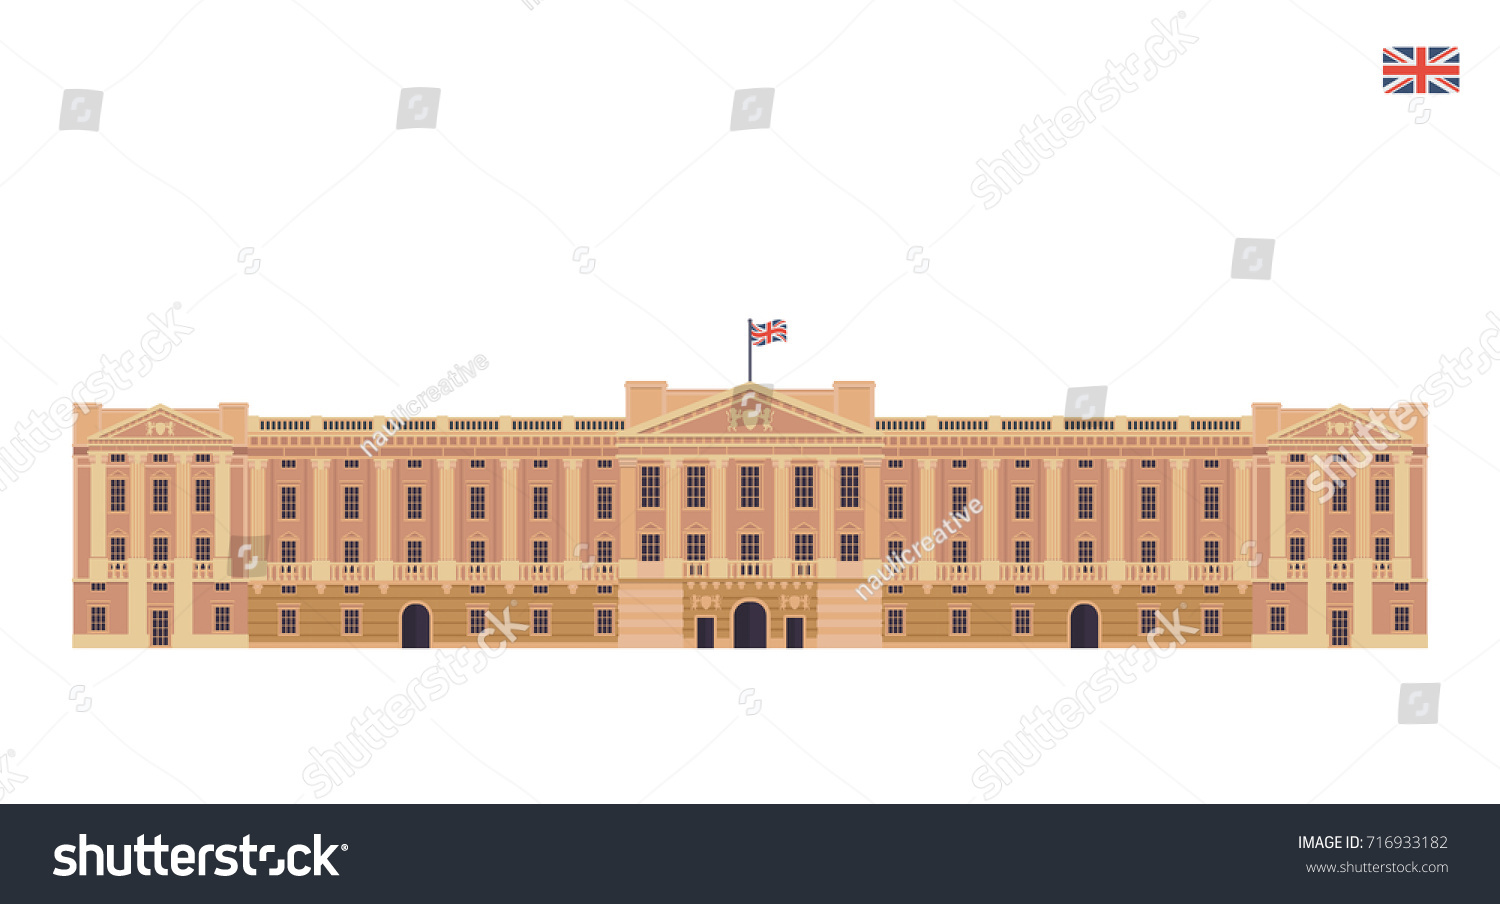 SVG of Modern United Kingdom Famous Tourist Landmark Building Illustration - Buckingham Palace svg